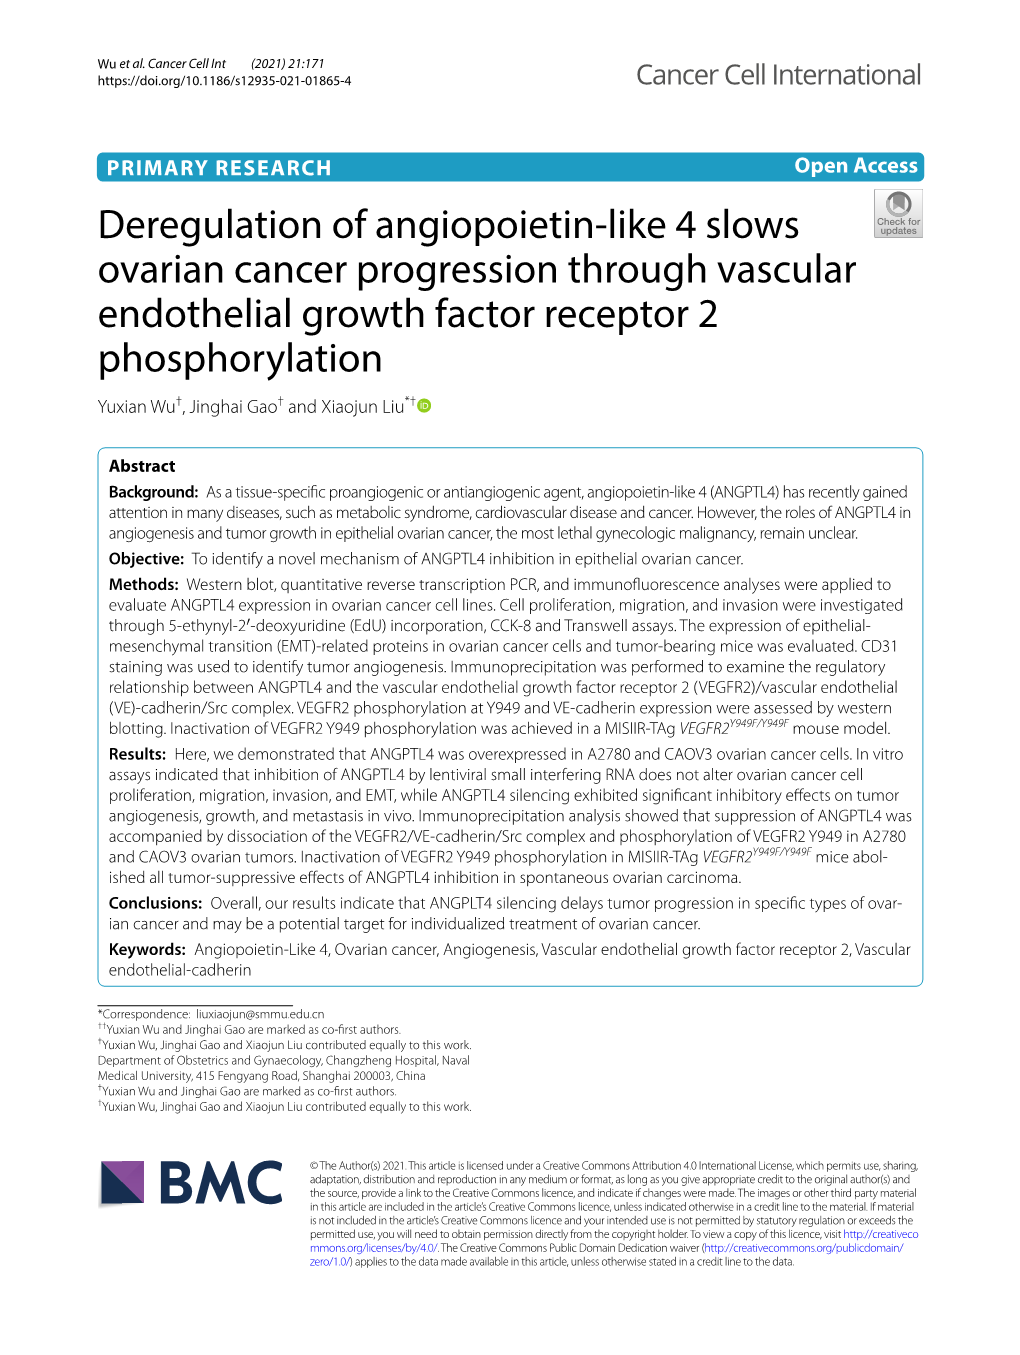 Deregulation of Angiopoietin-Like 4 Slows Ovarian Cancer Progression